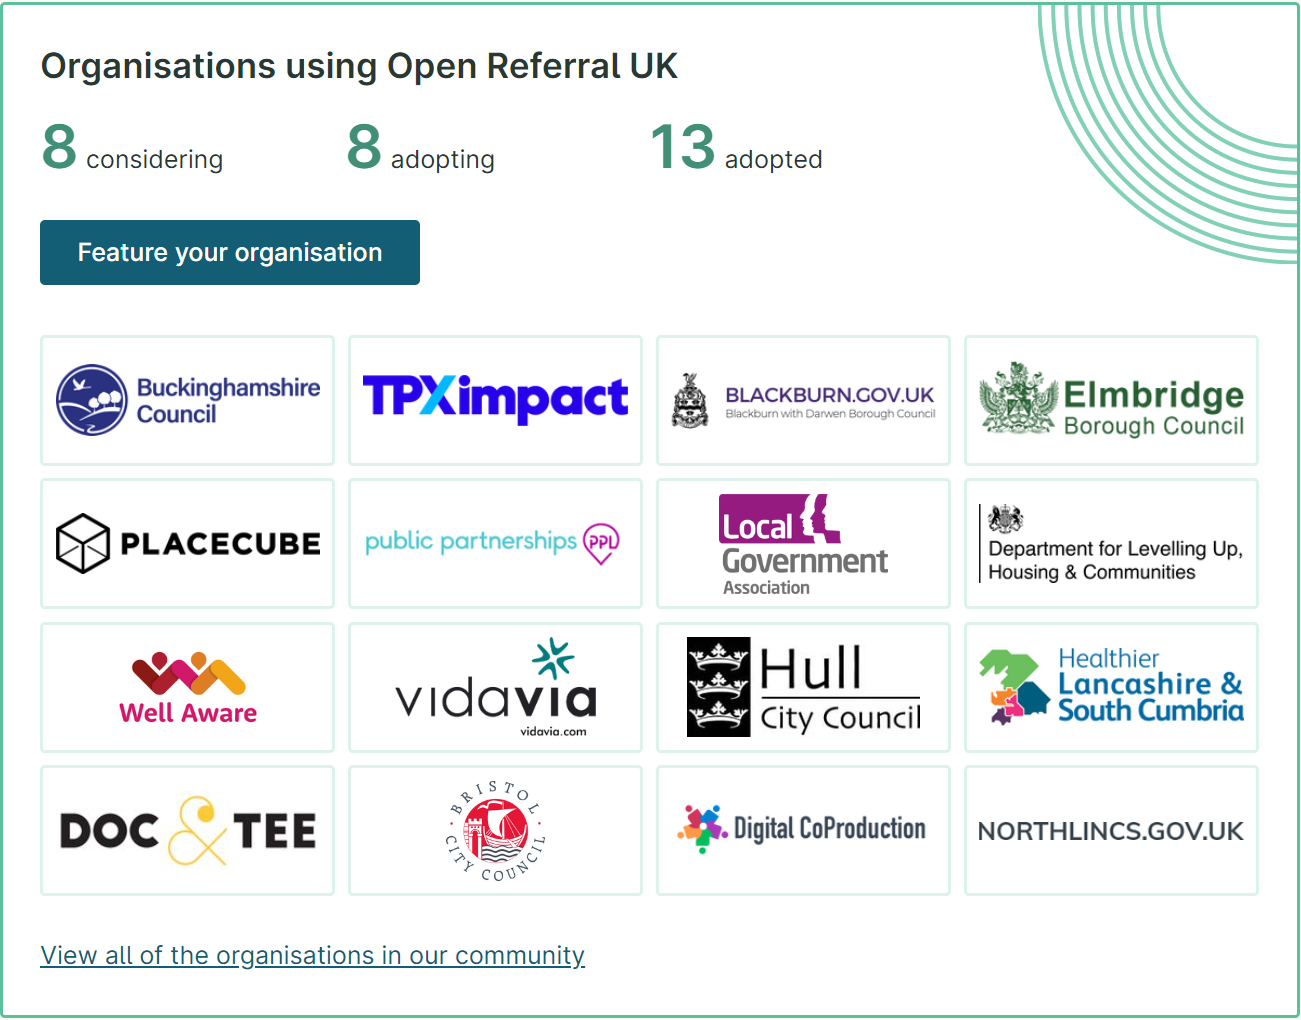 Organisations using Open Referral UK image